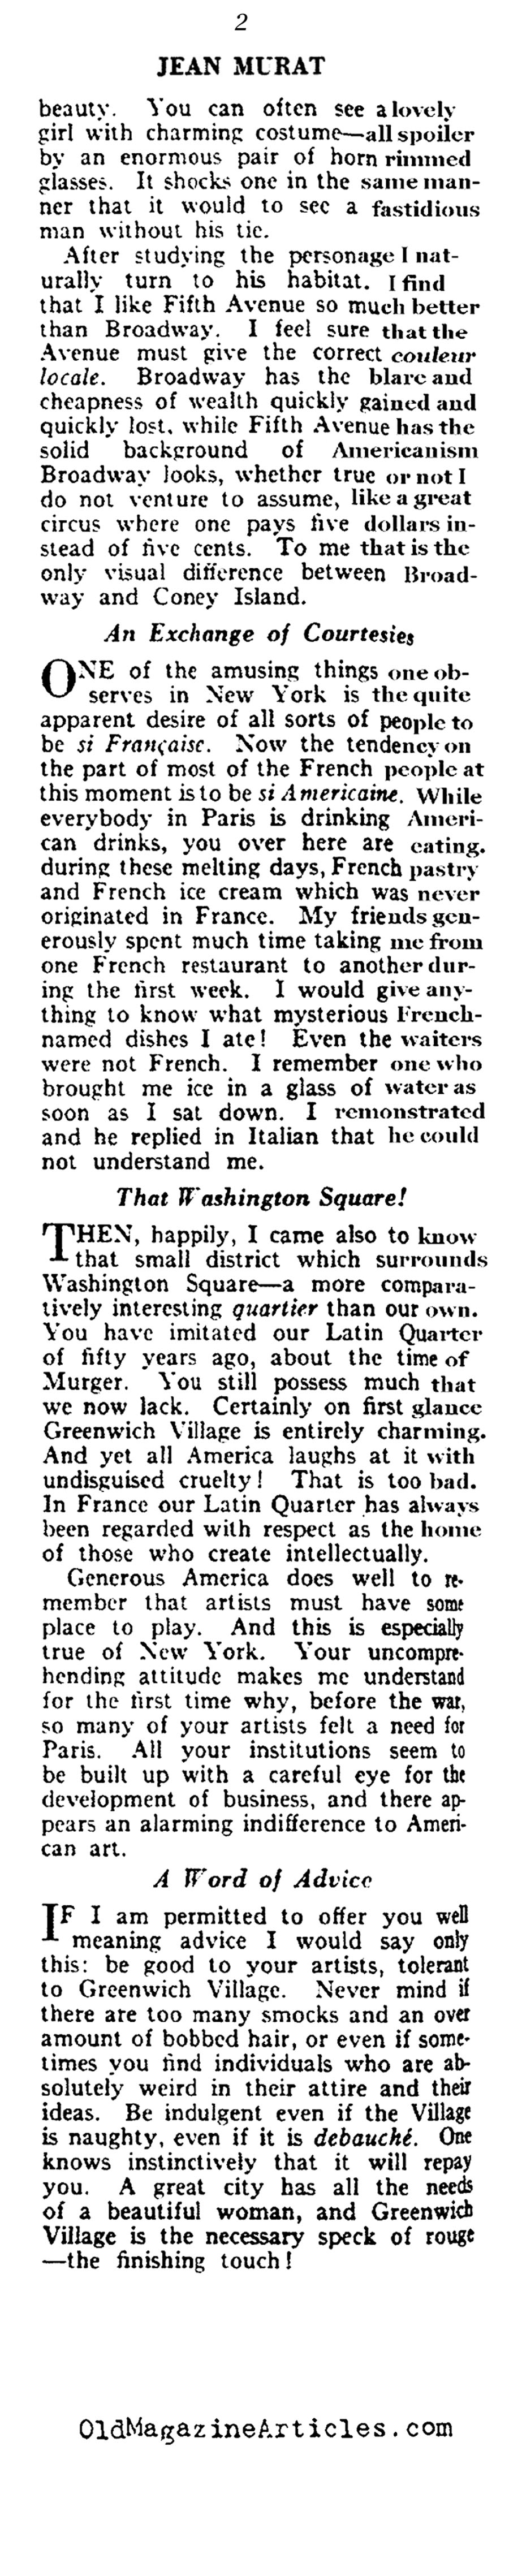 A Frenchman Looks at New York (Vanity Fair Magazine, 1919)